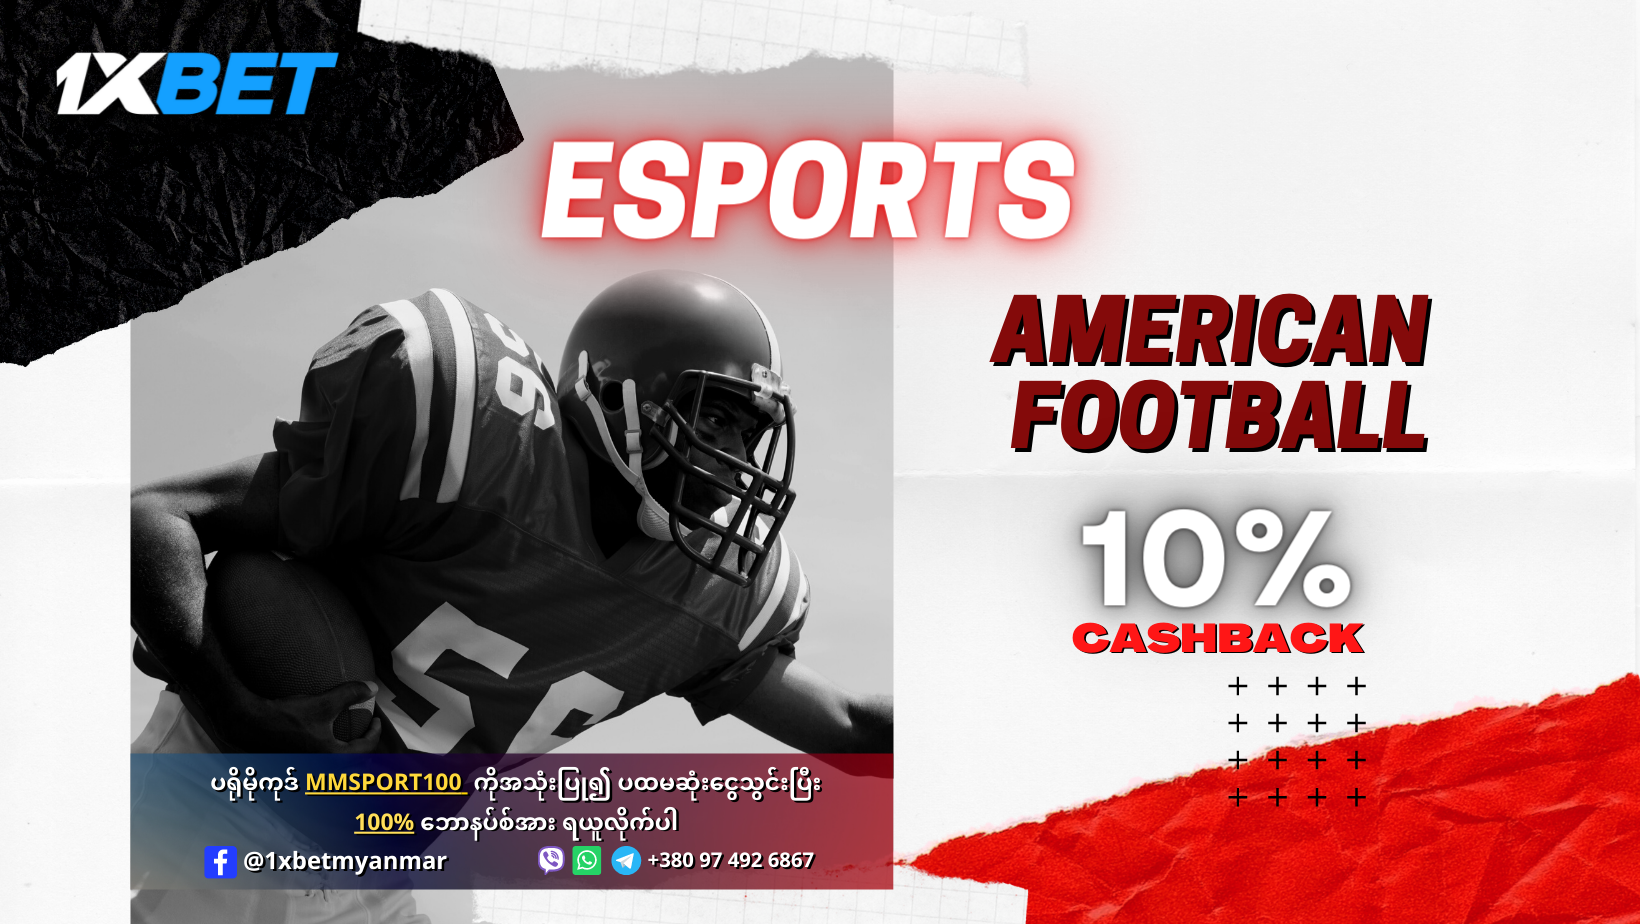 1xBet Esports American football Promotion